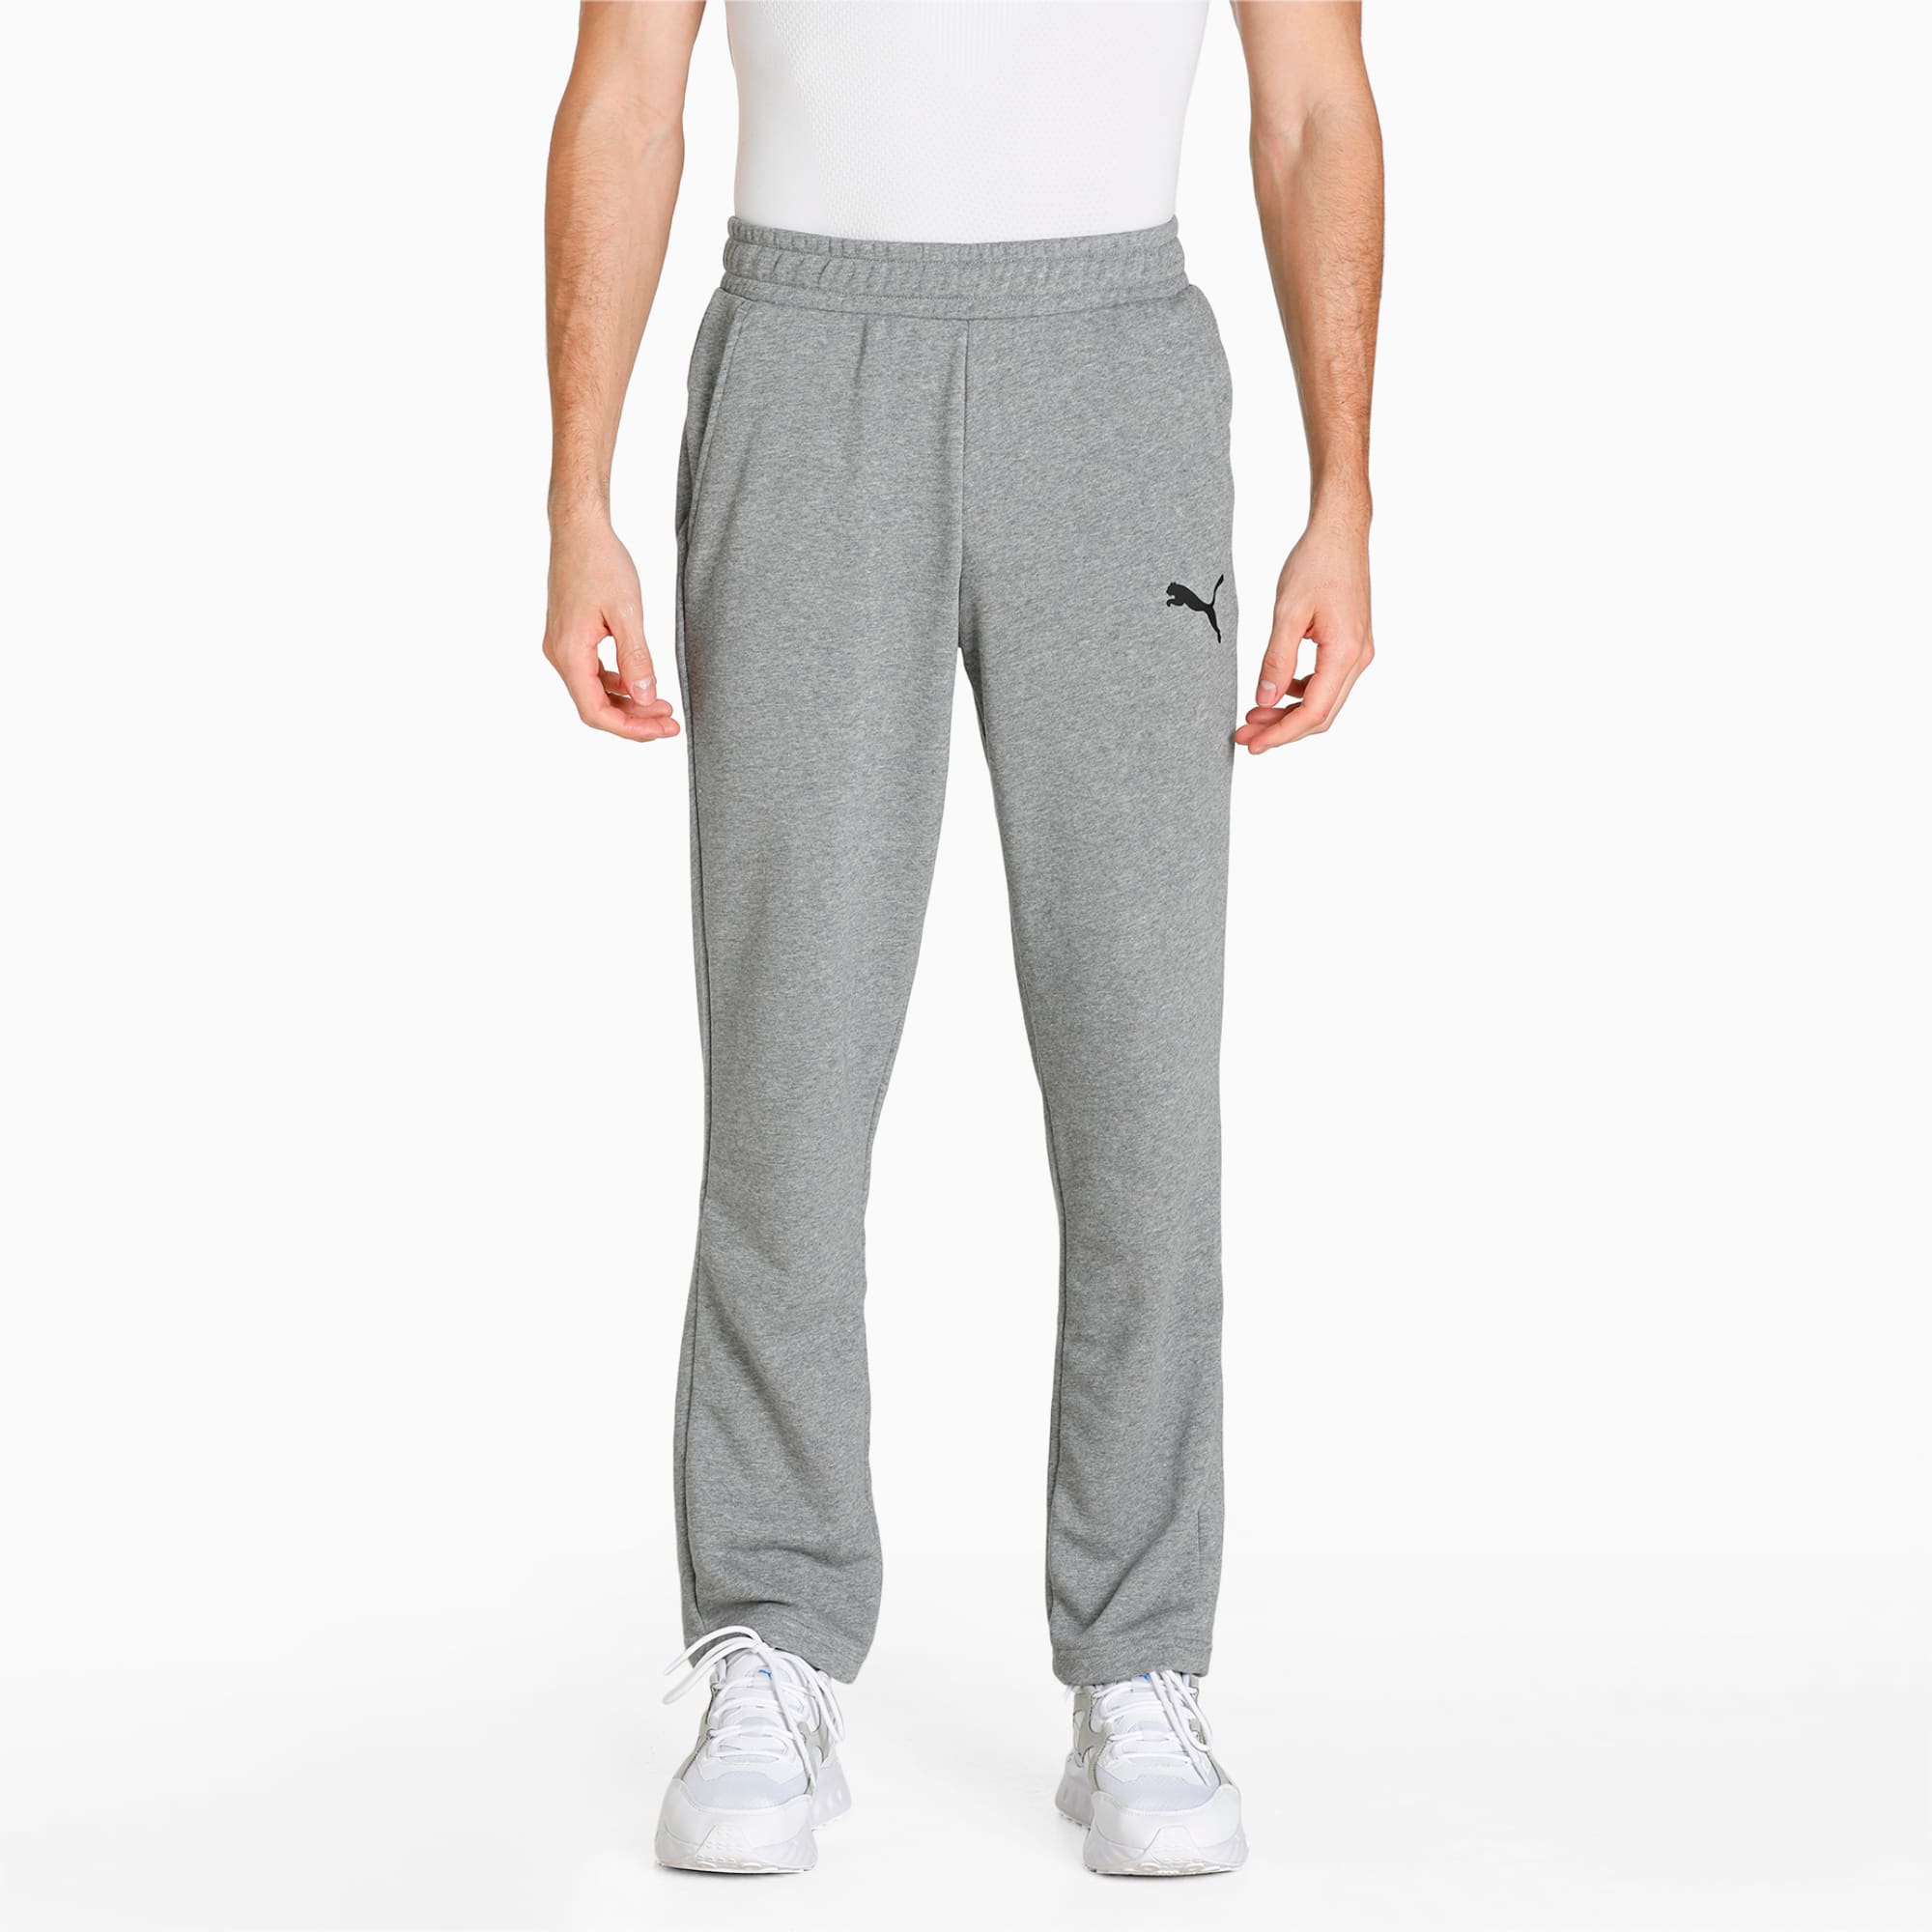 PUMA Essentials Logo Men's Sweatpants, Medium Grey Heather, Size XL, Clothing